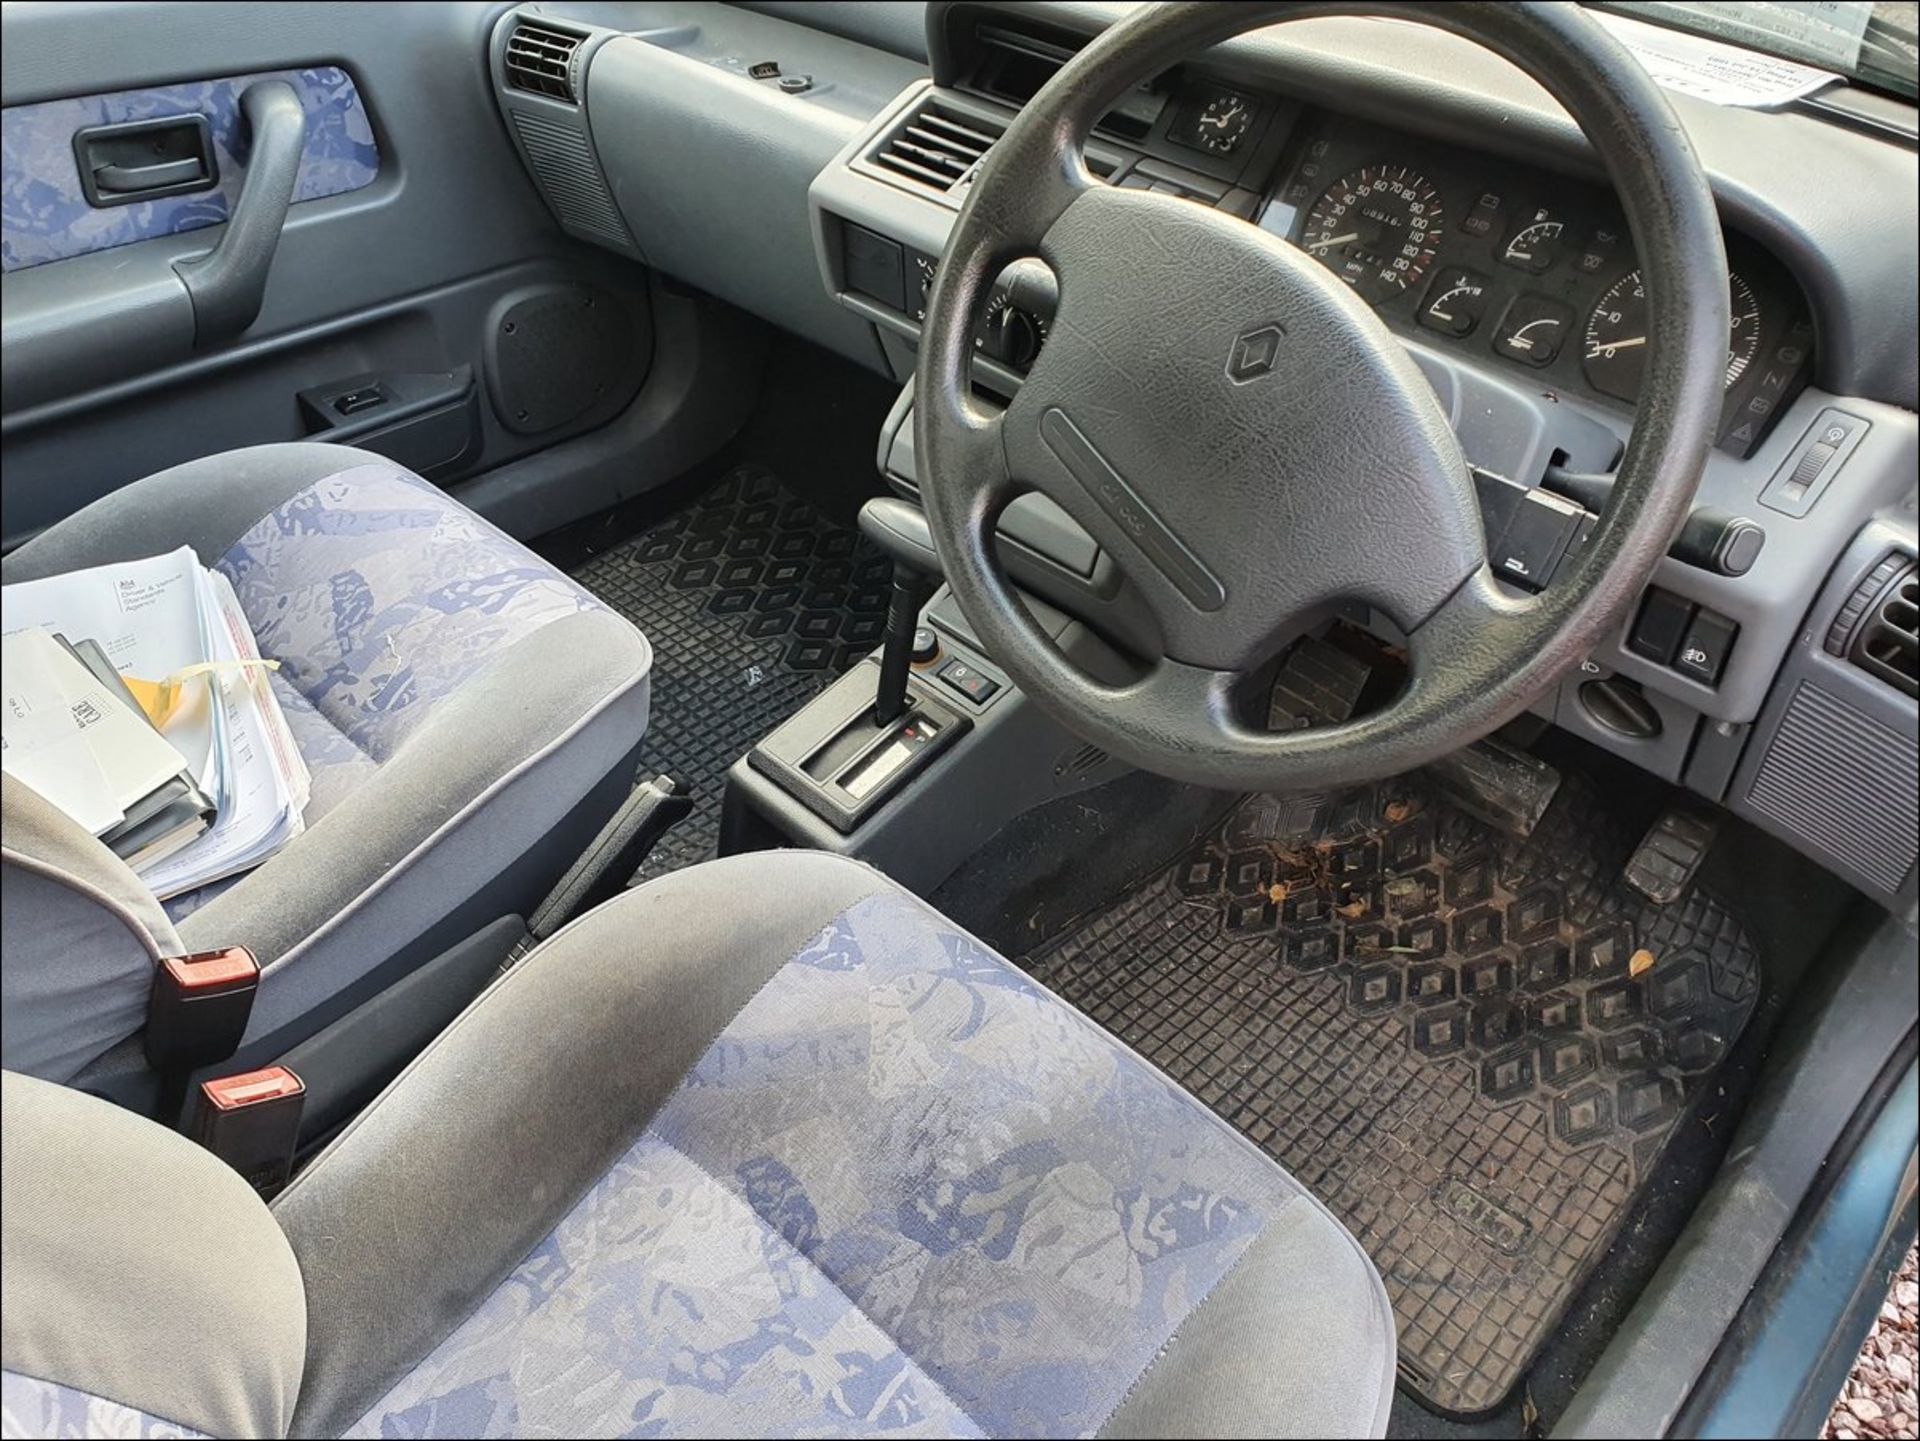 1995 RENAULT CLIO RT CHAMPS ELYSEES A - 1390cc 5dr Hatchback (Blue, 87k) - Image 5 of 10